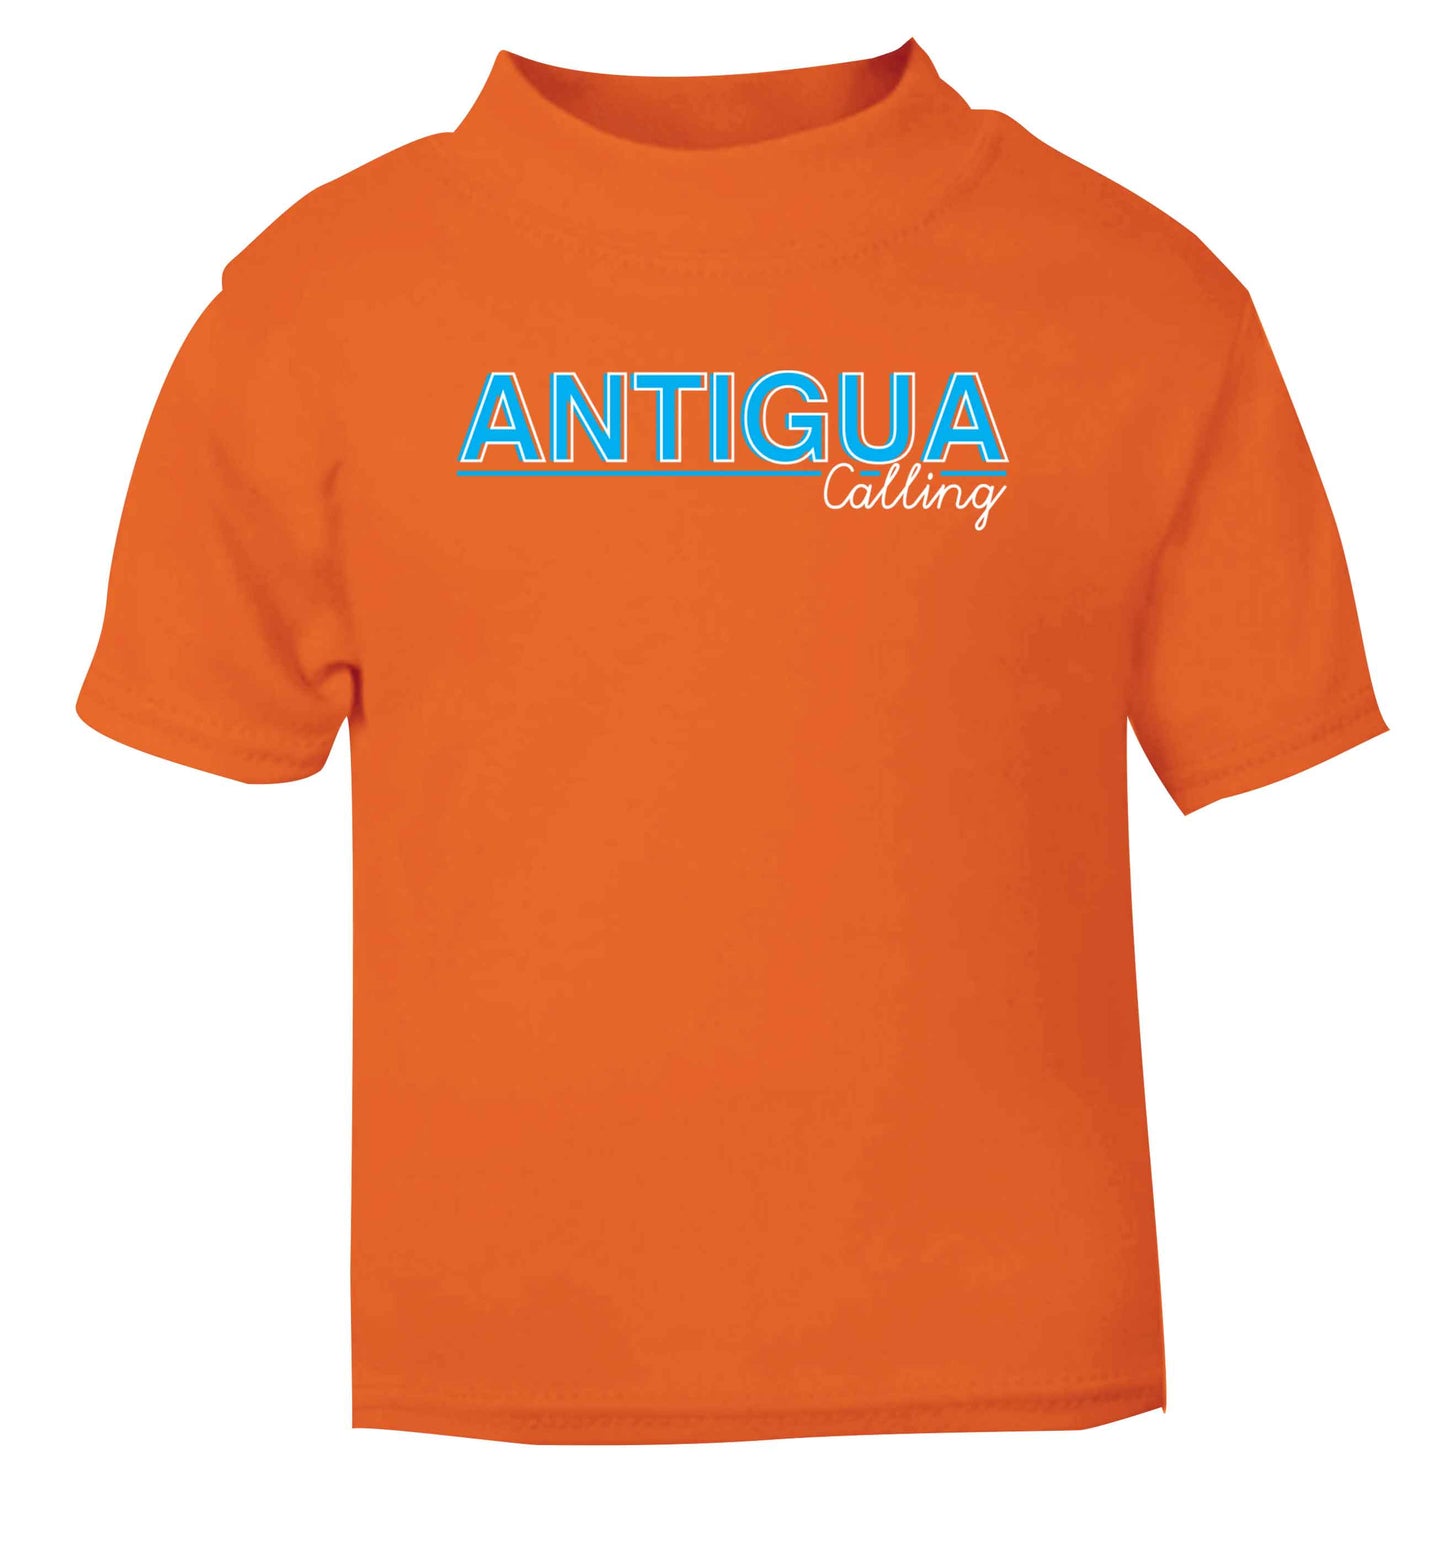 Antigua calling orange Baby Toddler Tshirt 2 Years